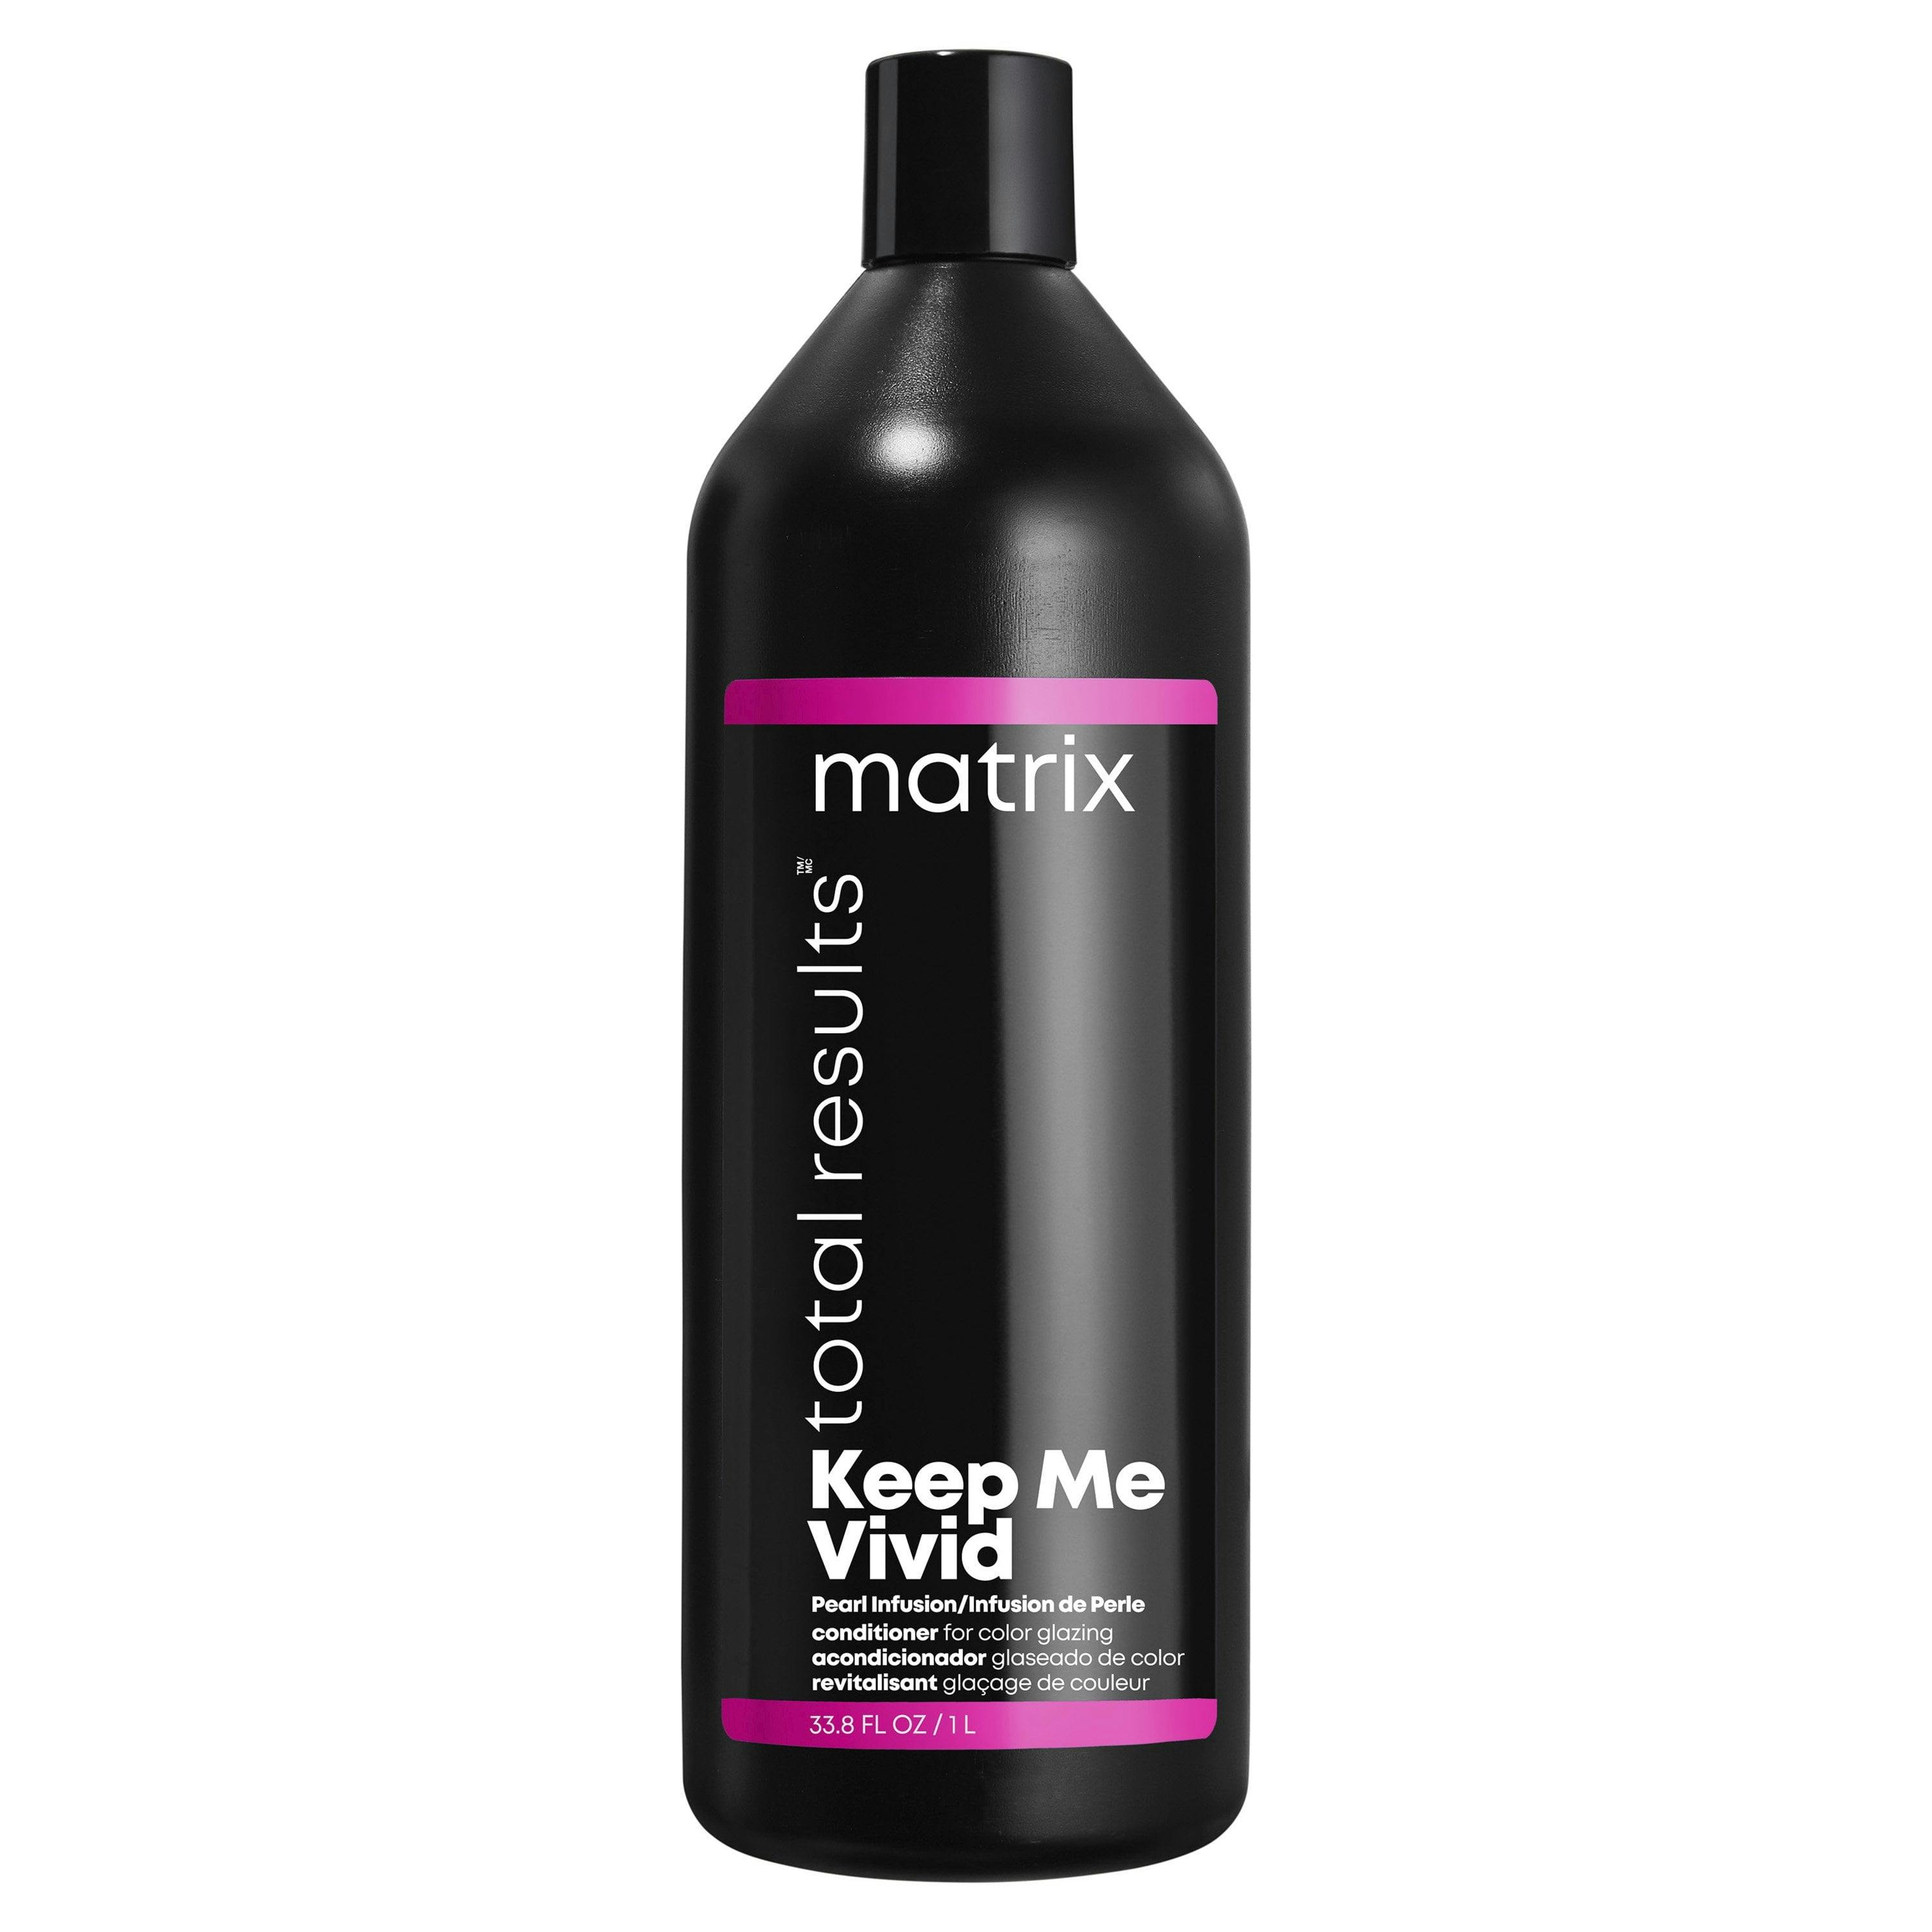 Matrix Total Results Keep Me Vivid 1 Litre Shampoo and Conditioner Bundle